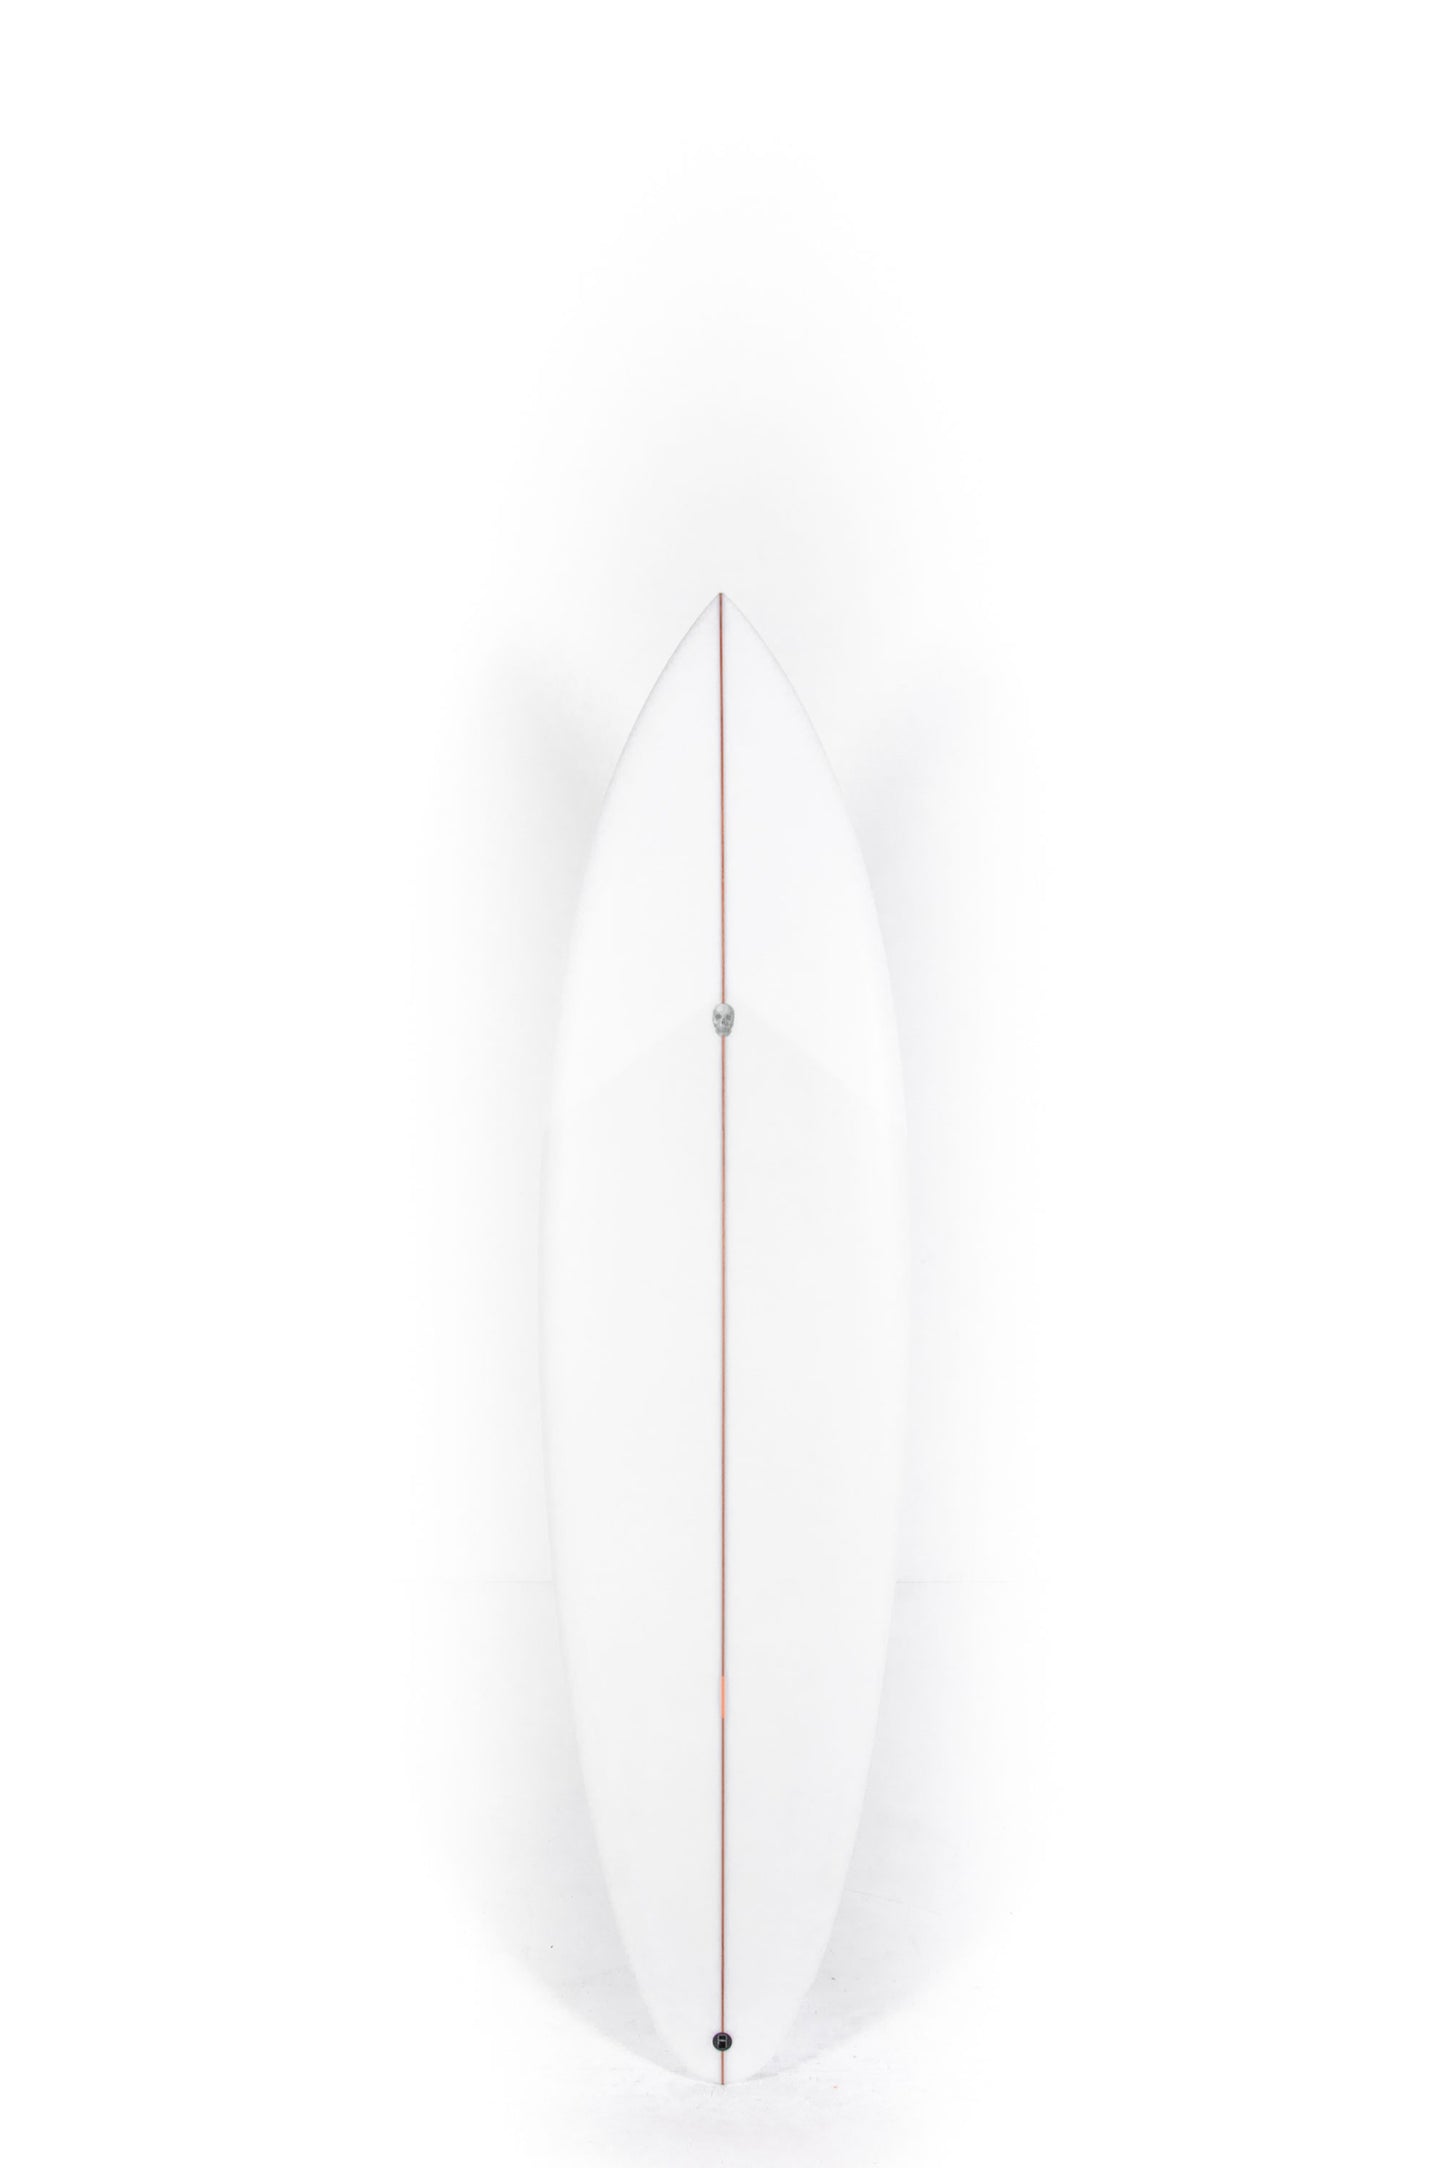 
                  
                    Pukas-Surf-Shop-Christenson-Surfboards-Osprey-Chris-Christenson-6_8
                  
                